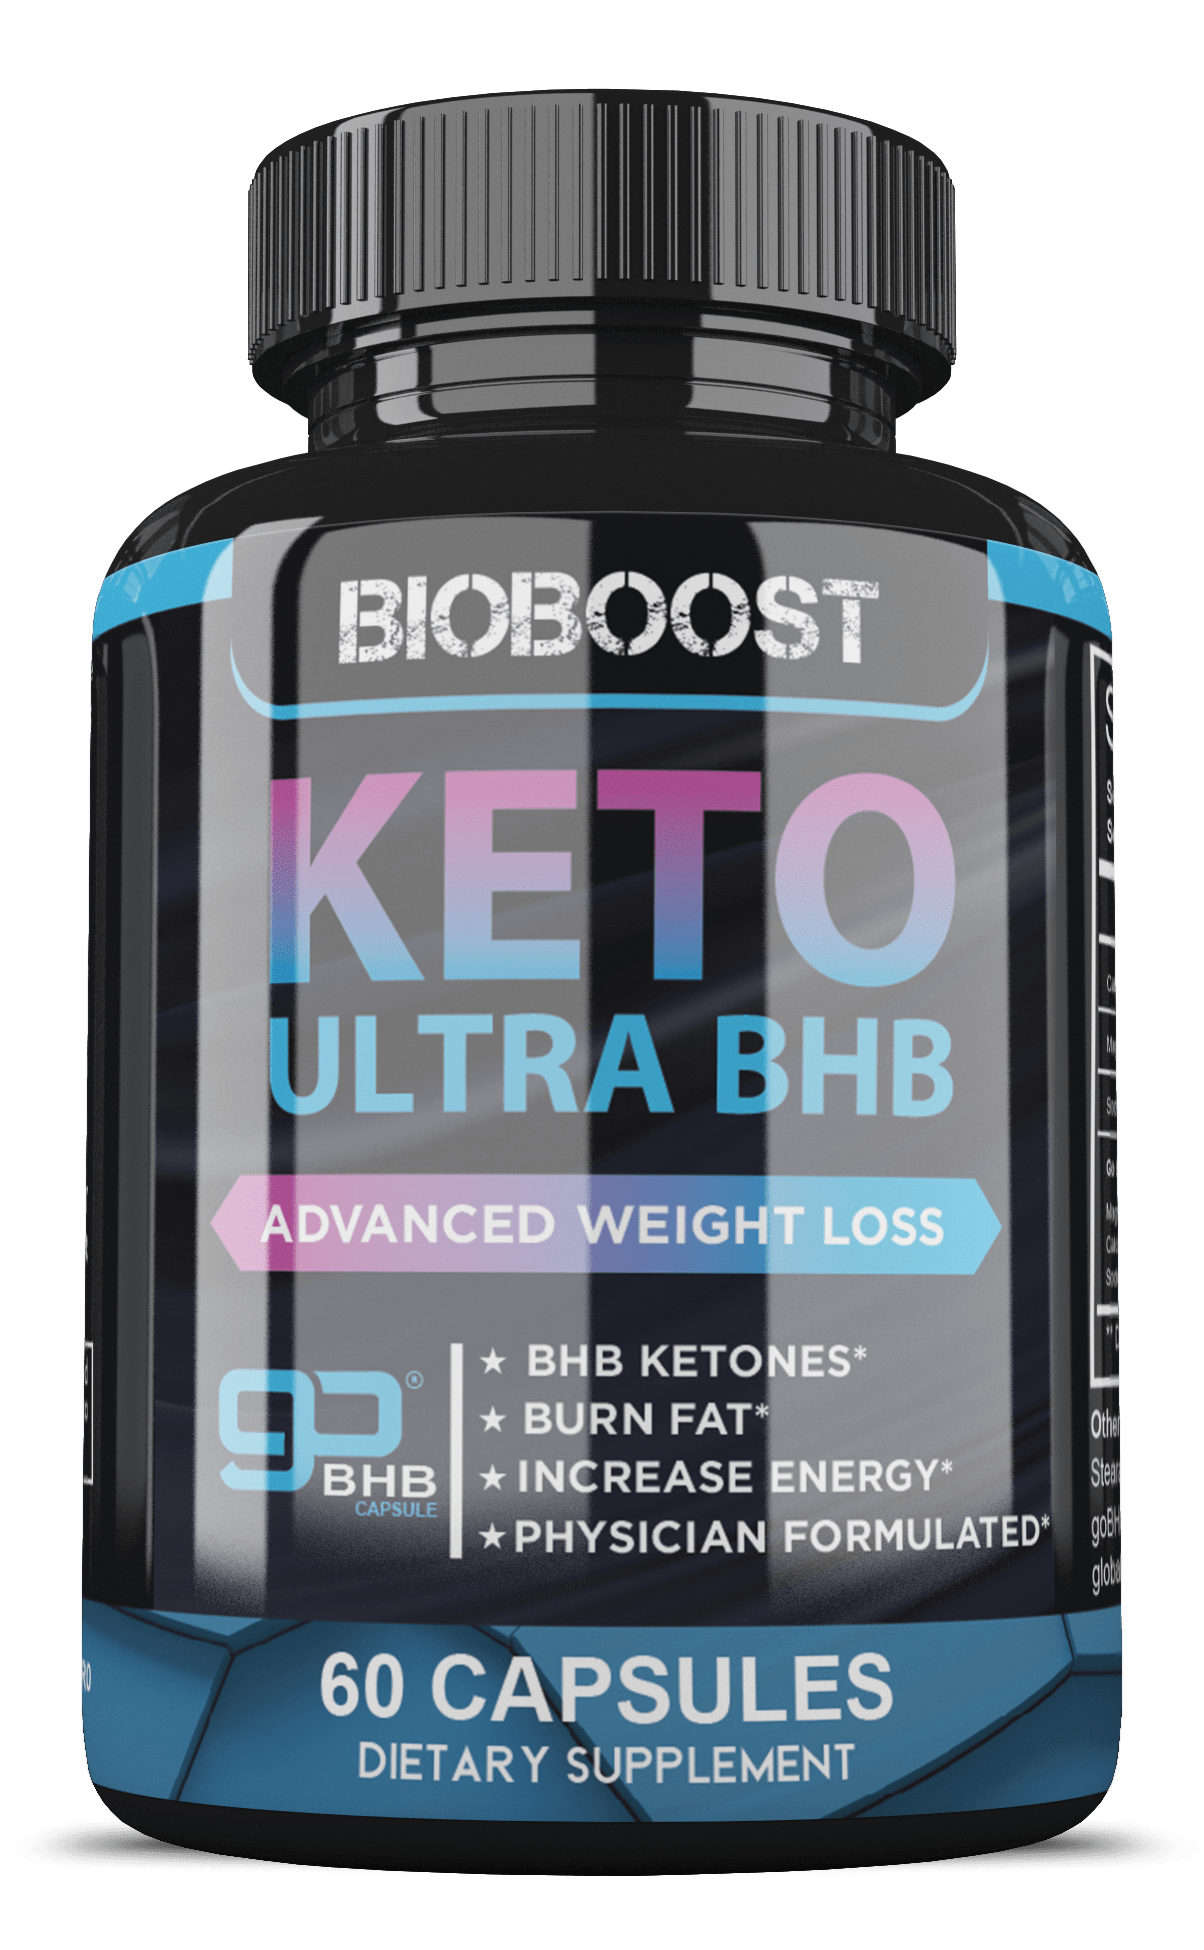 Keto Ultra BHB – ADVANCED WEIGHT LOSS FORMULA